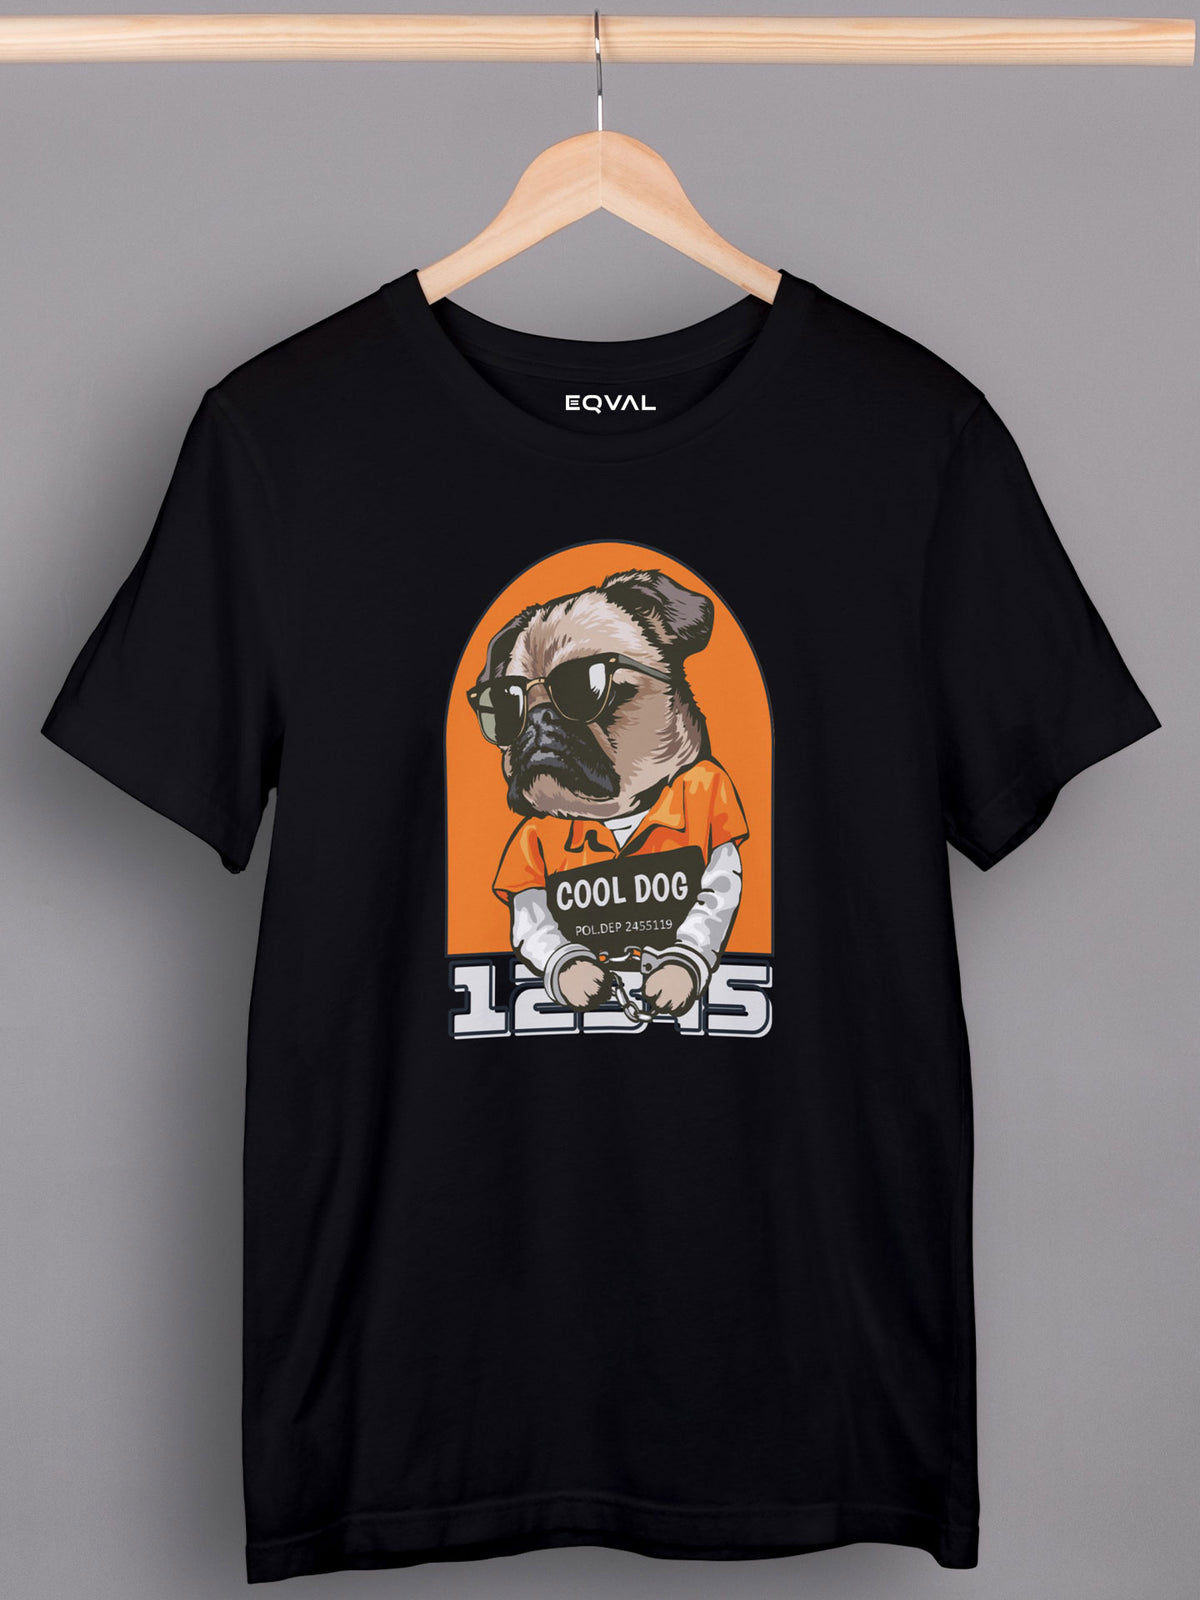 Men's Black Cool Dog Printed T-shirt